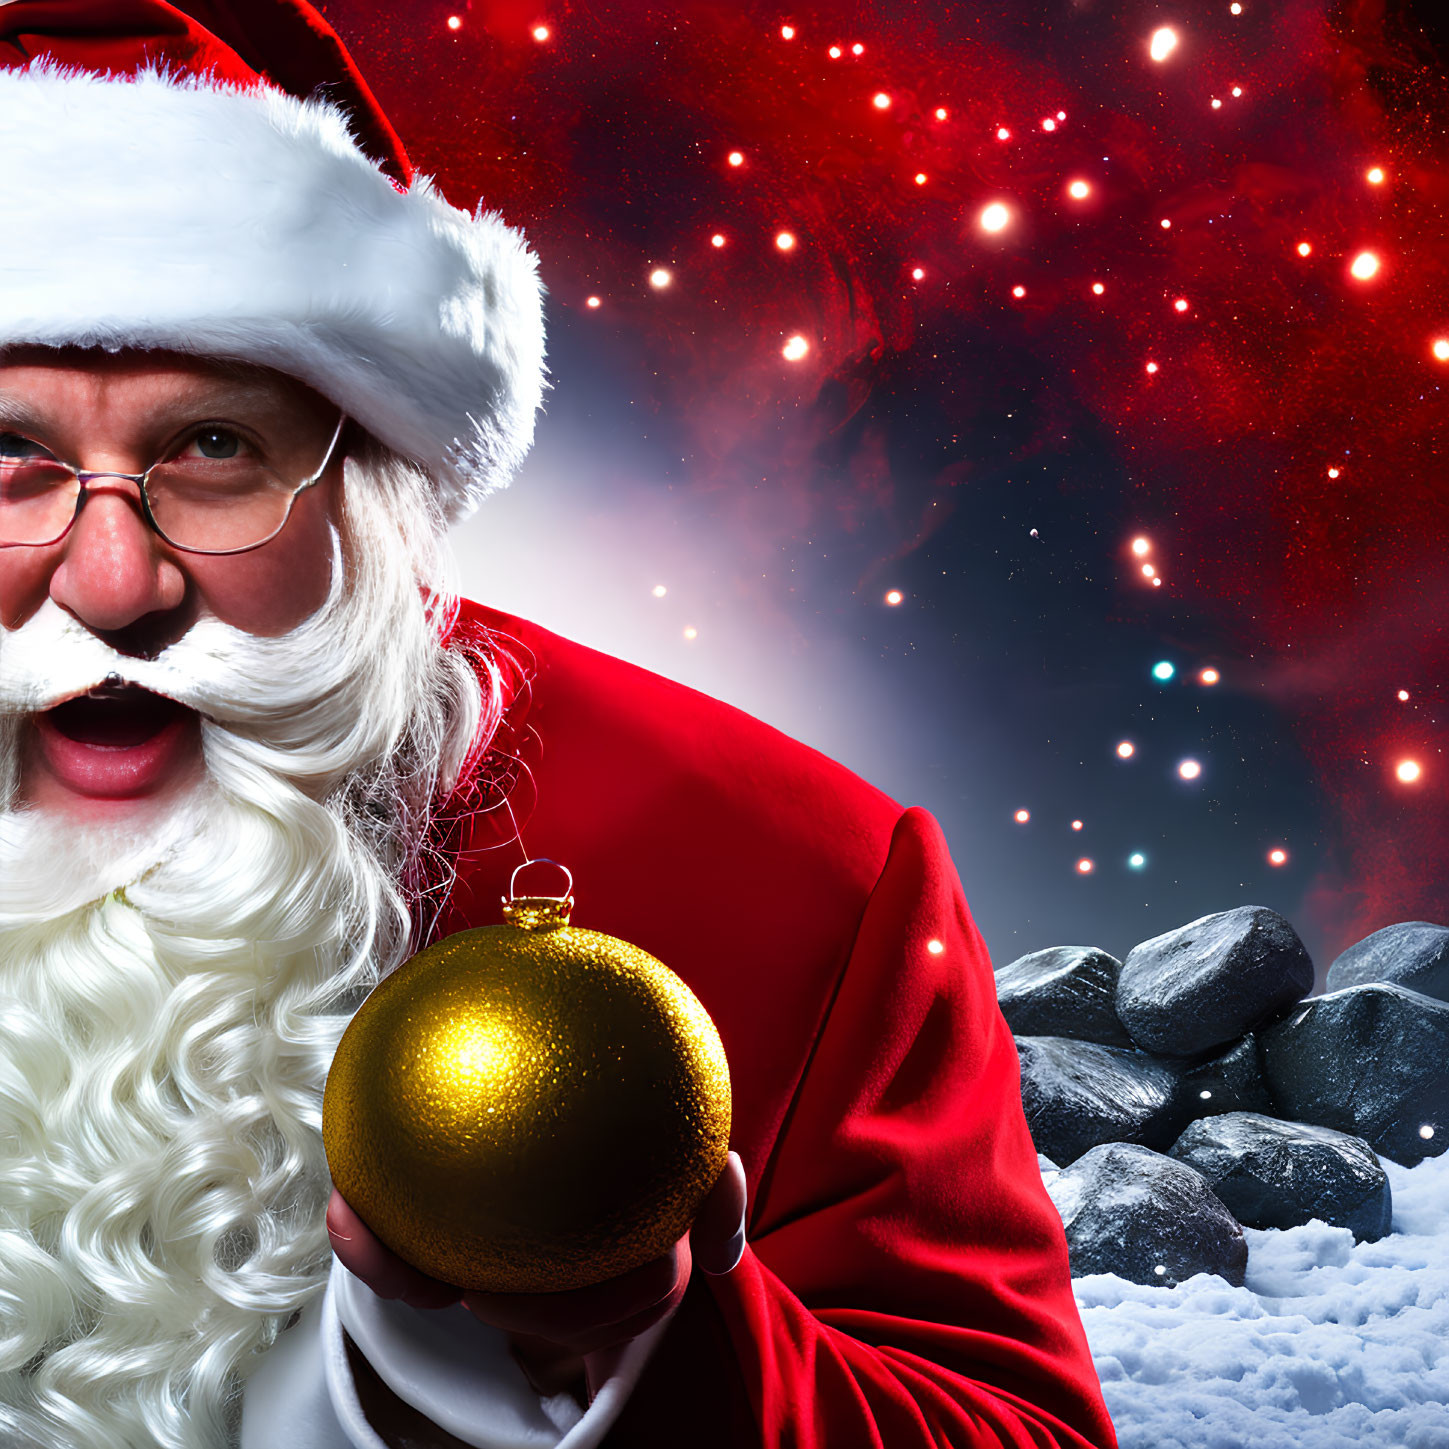 Festive Santa Claus with Golden Bauble in Cosmic Winter Scene